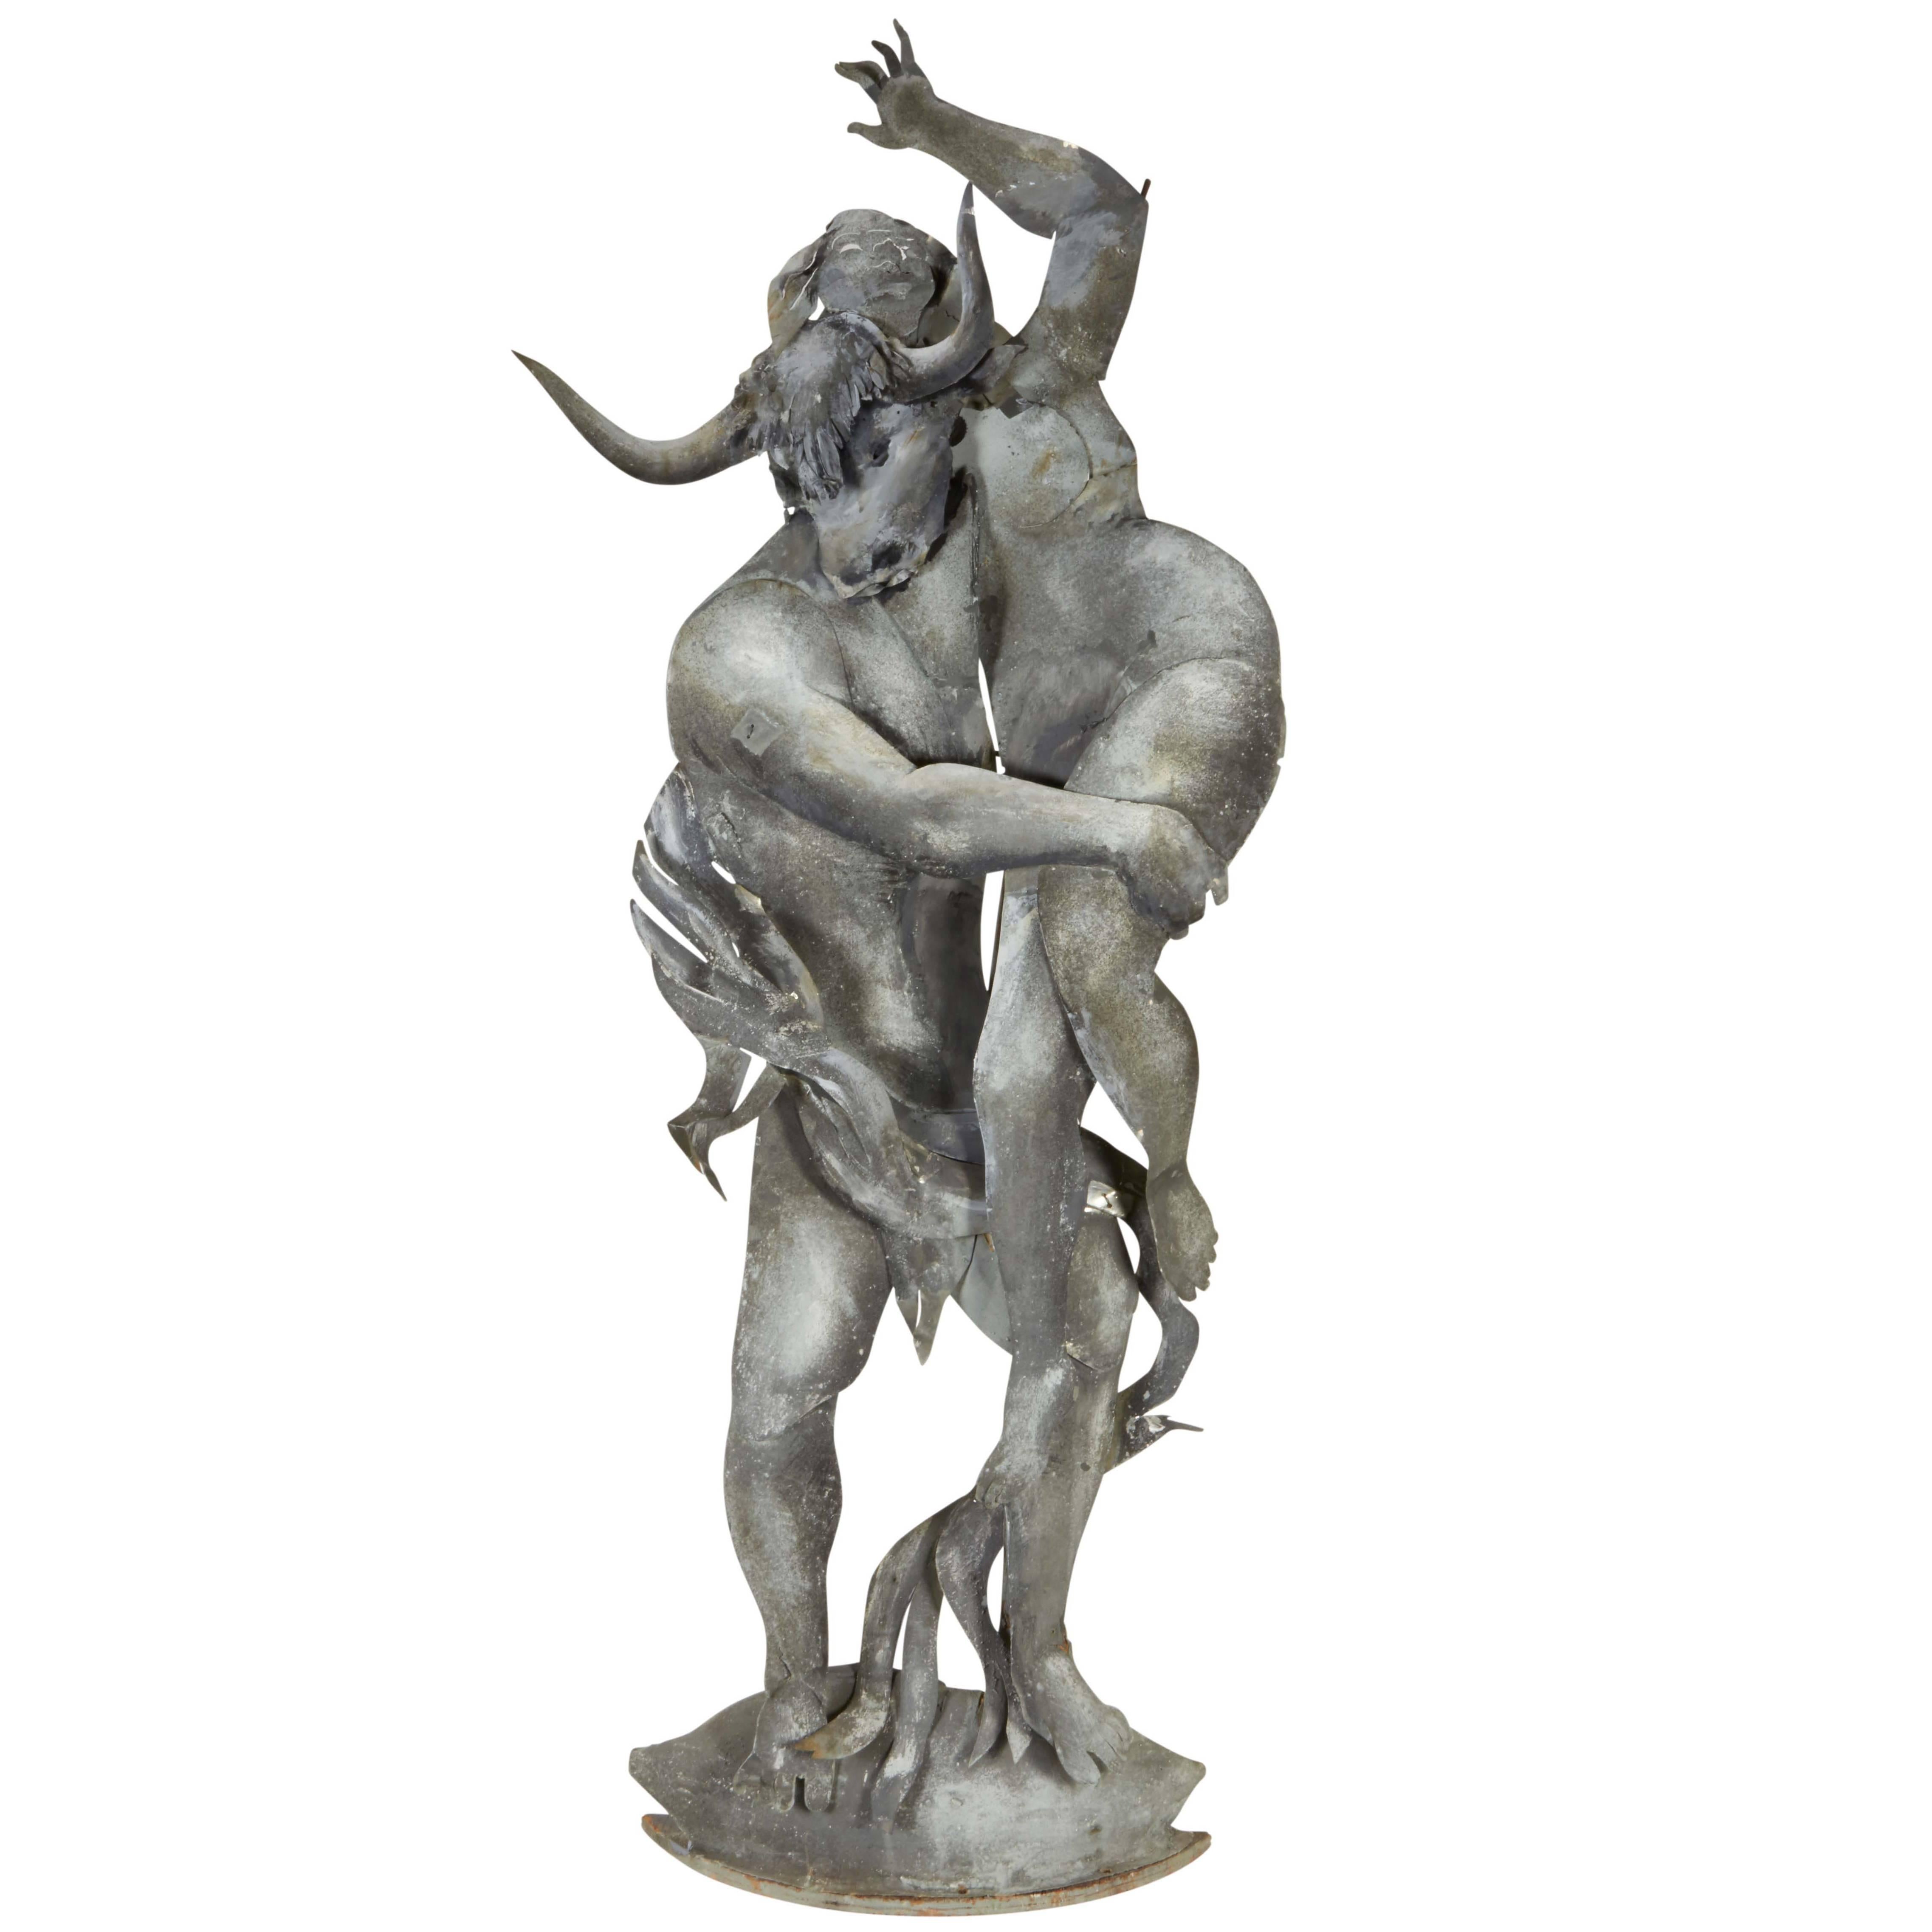 Modernist Sculpture of the Minotaur Abducting a Maiden